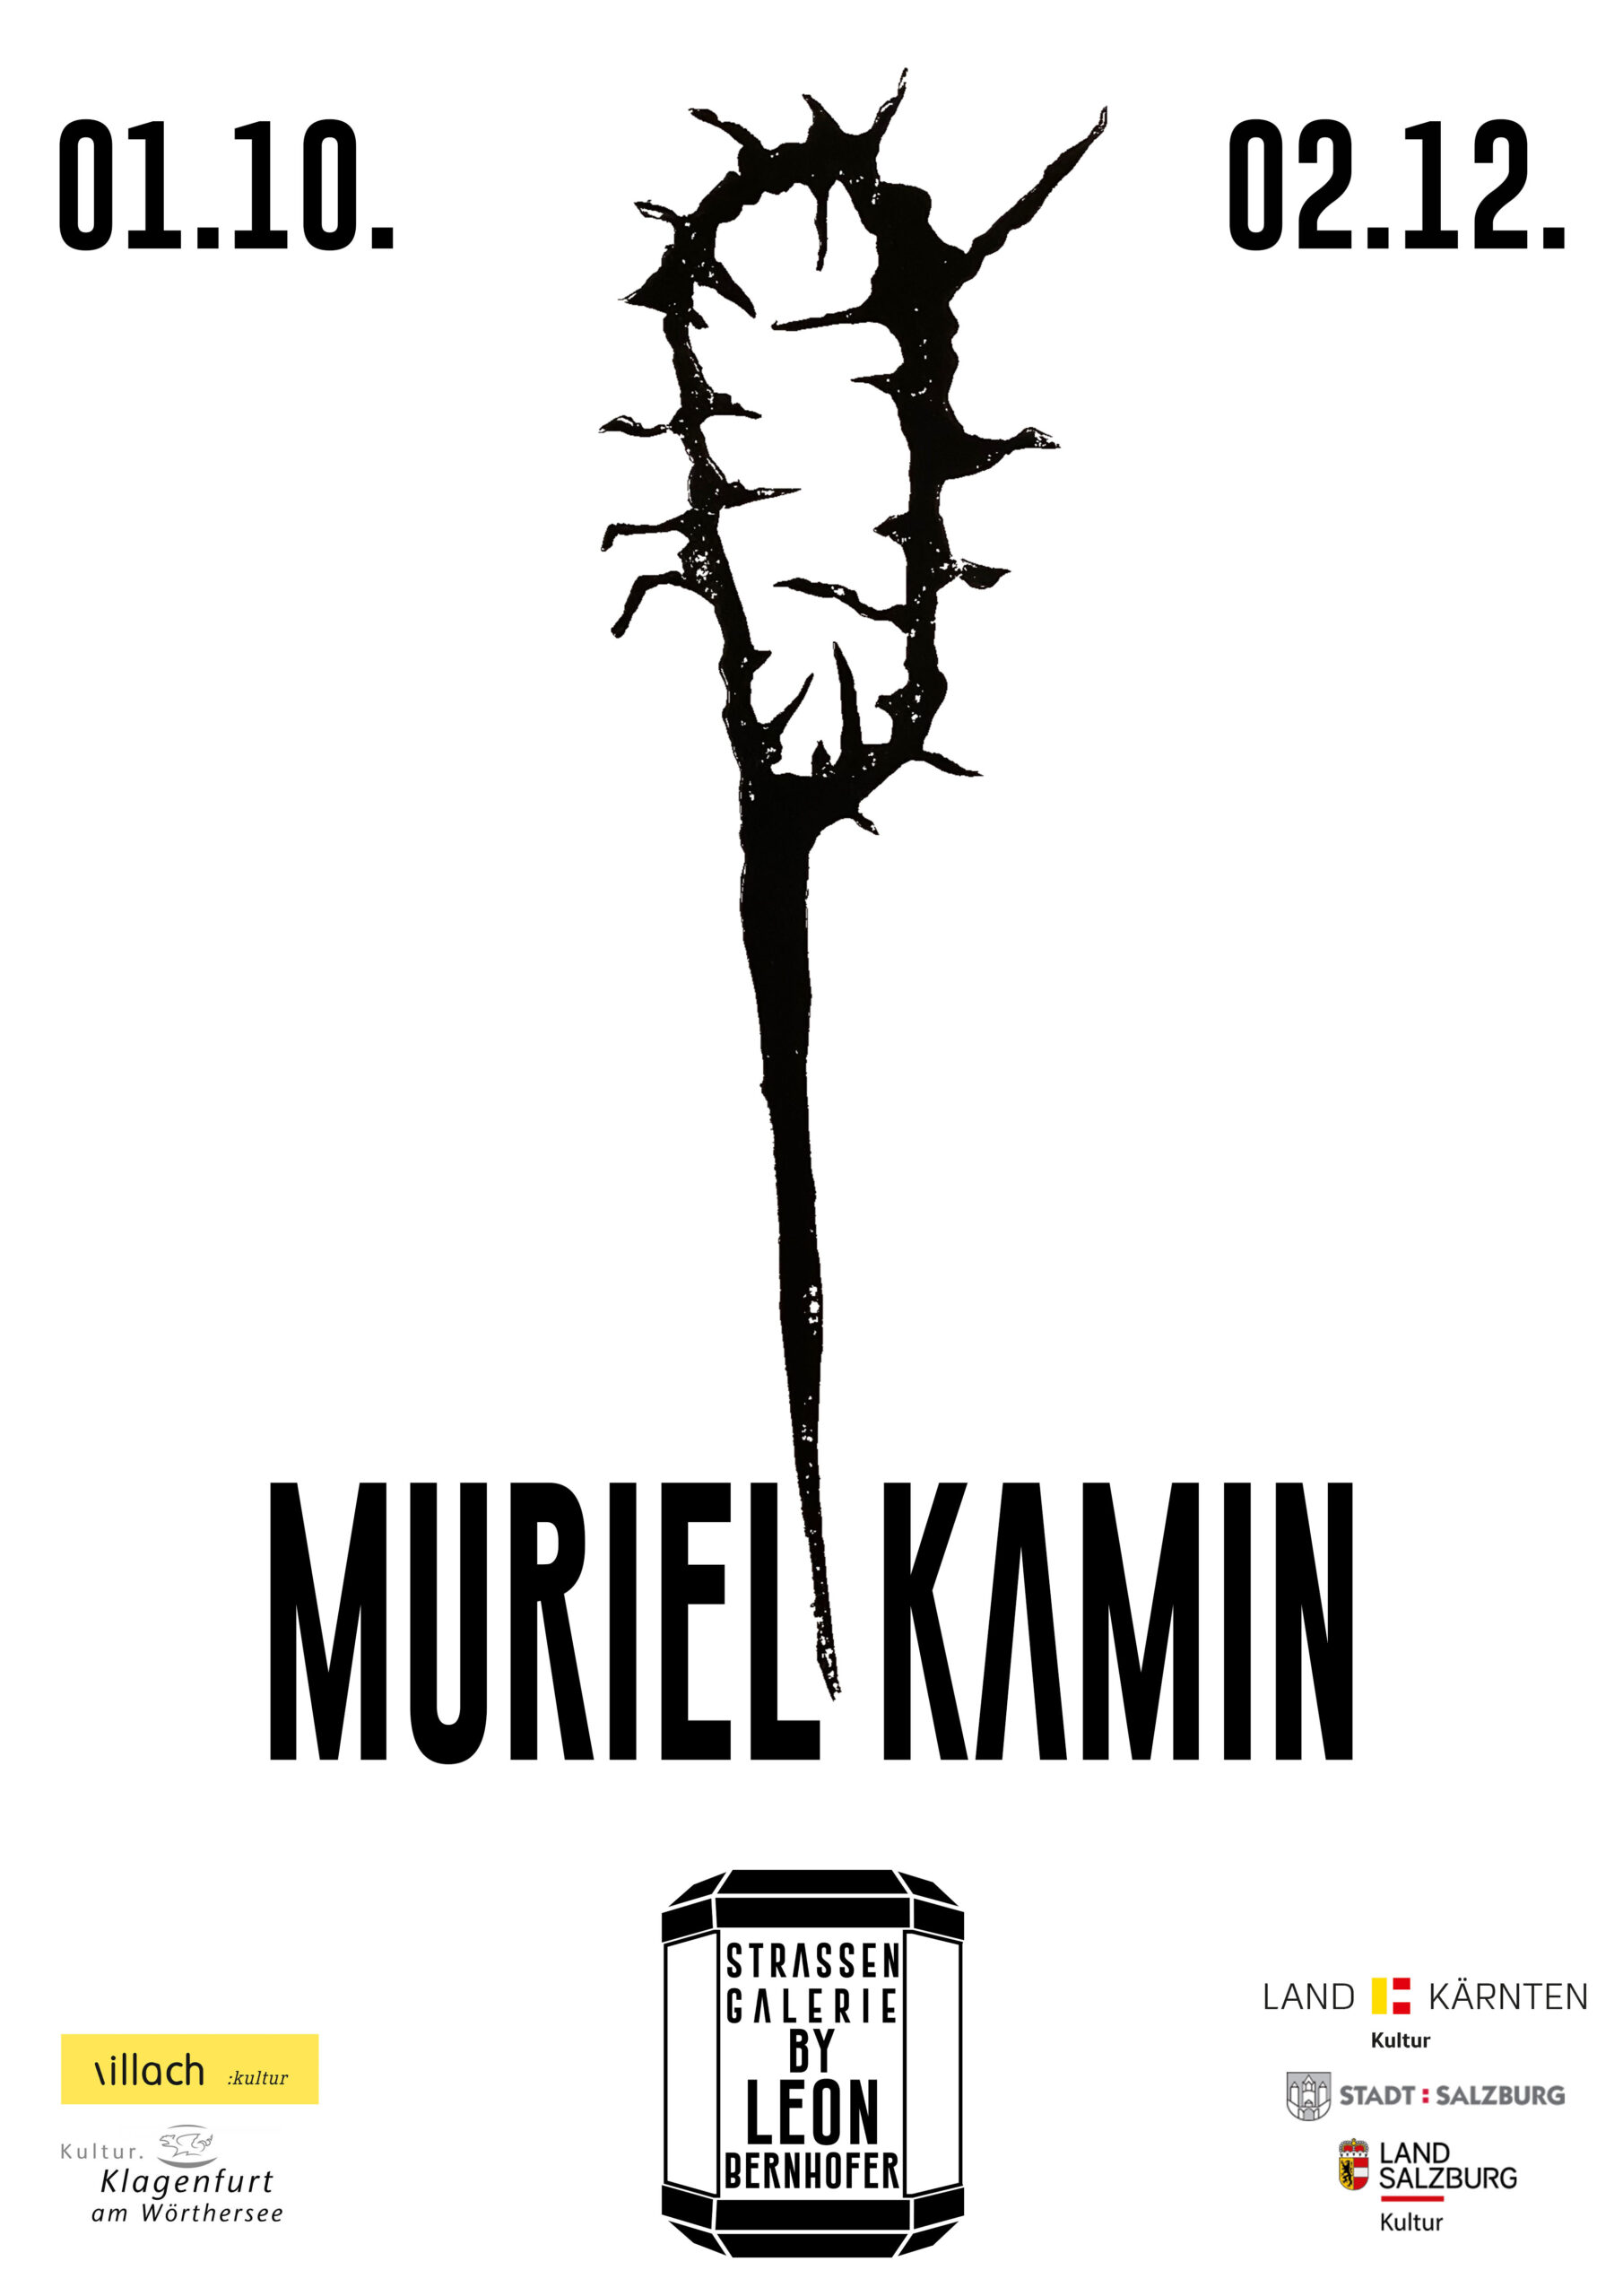 Muriel Kamin